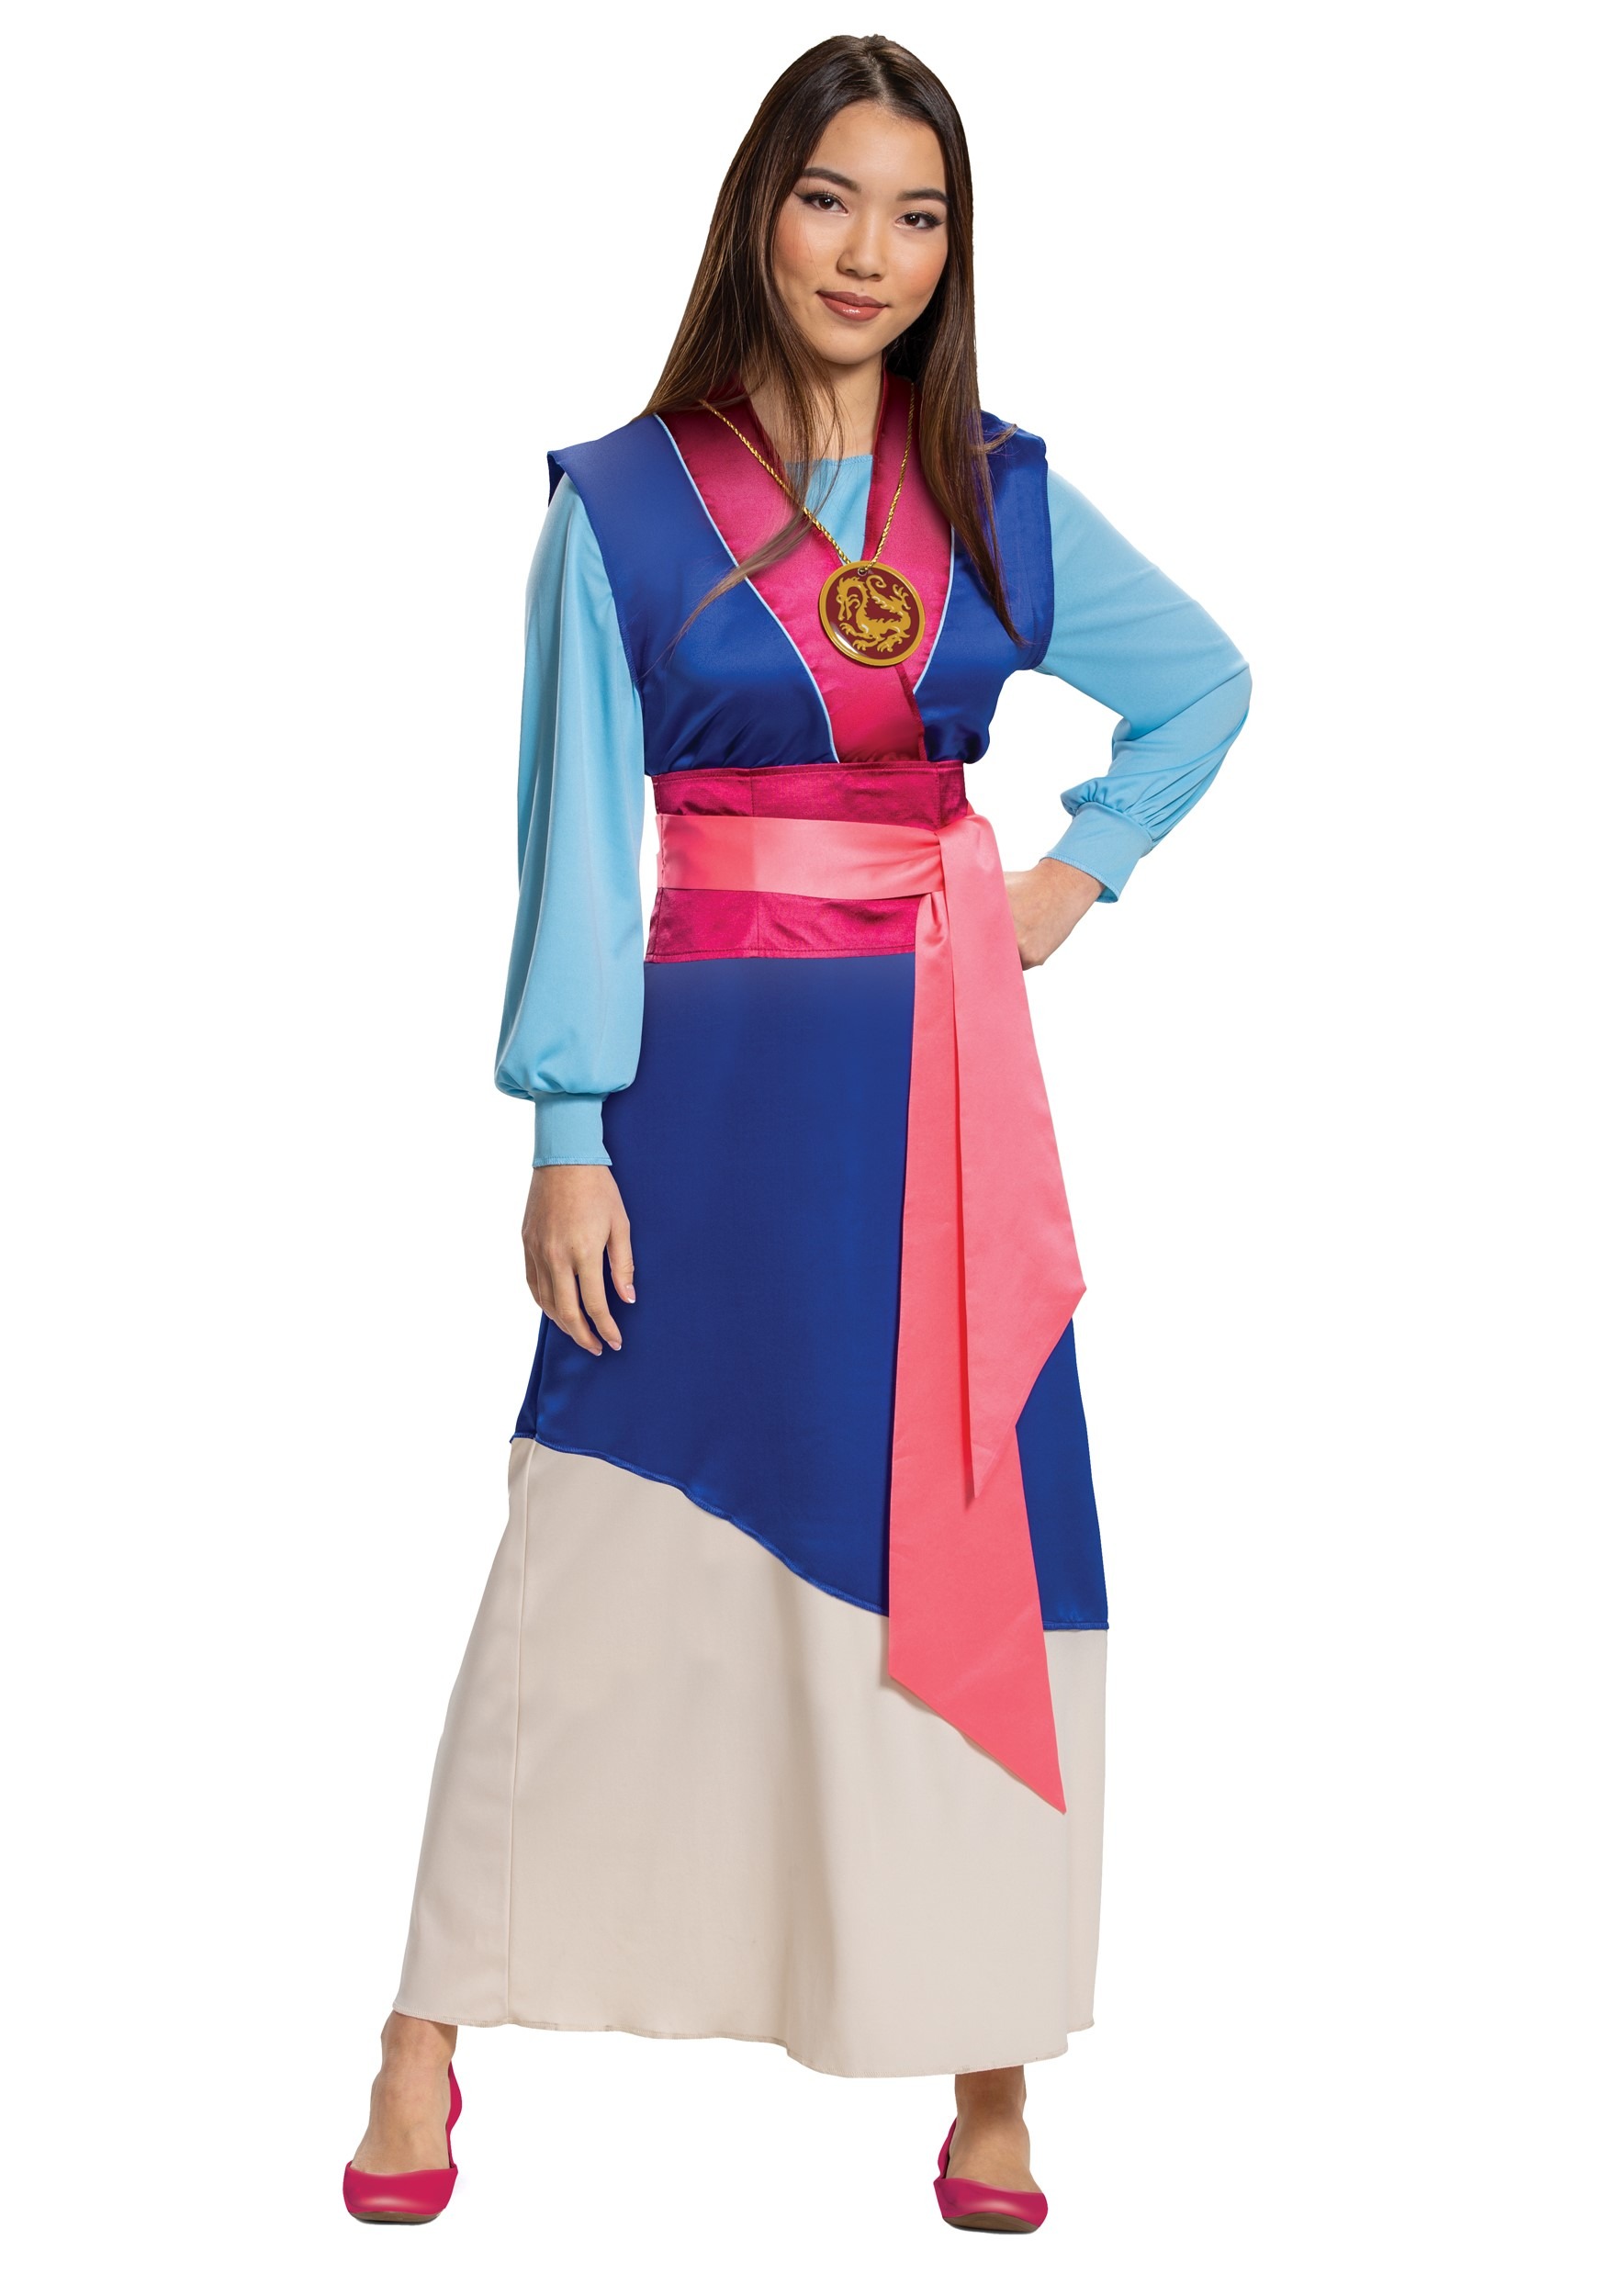 Disney Princess Mulan Dress For Girls And Women Mulan Costume Adult Cosplay Costumes Clothing